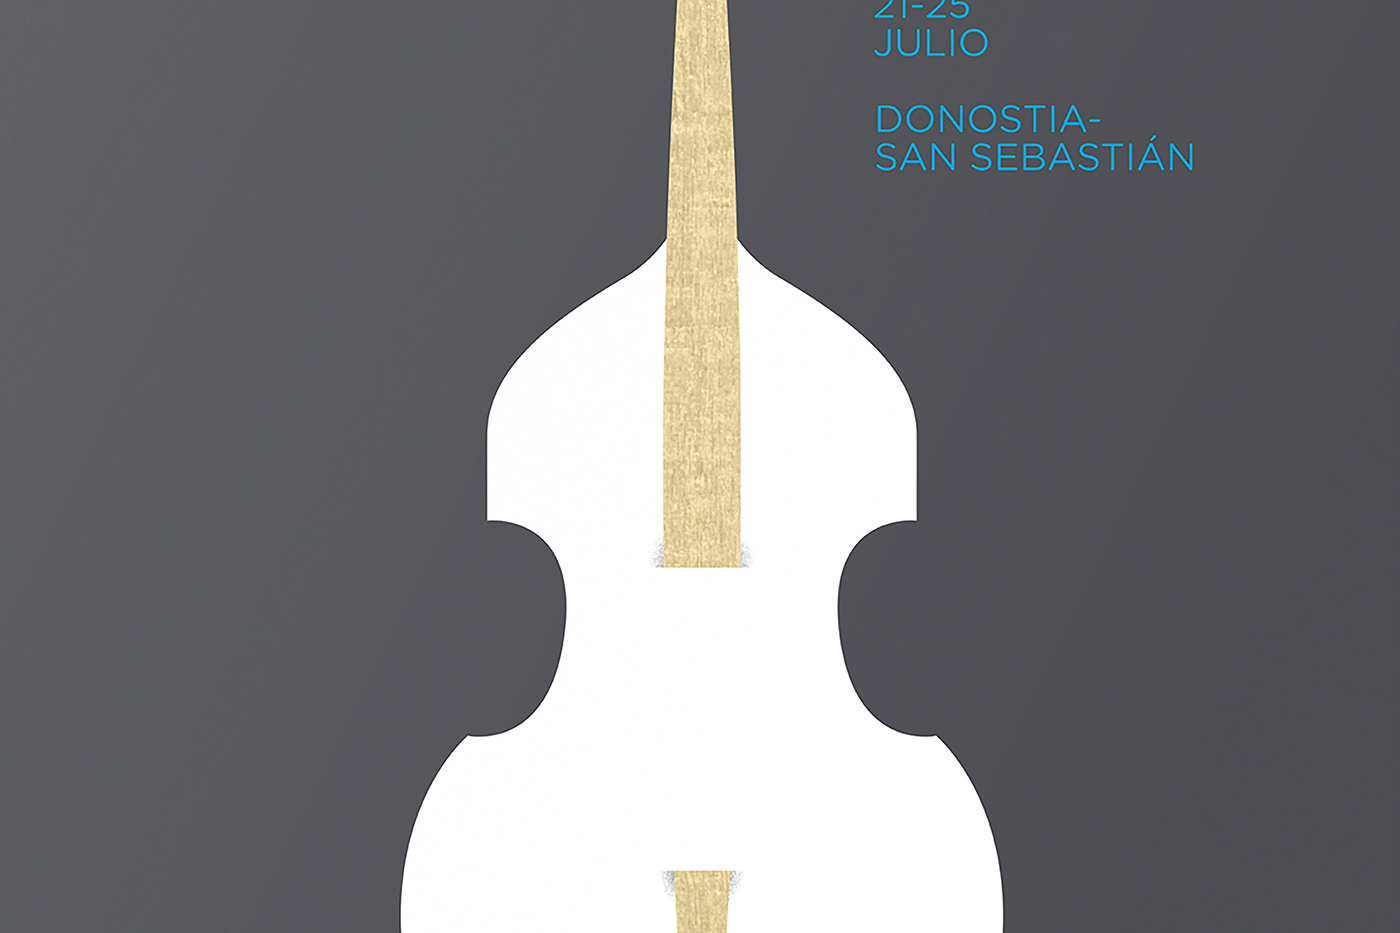 poster music poster festival jazz trumpet sun umbrella shadow contrabass toothpick tapa metaphor basque country